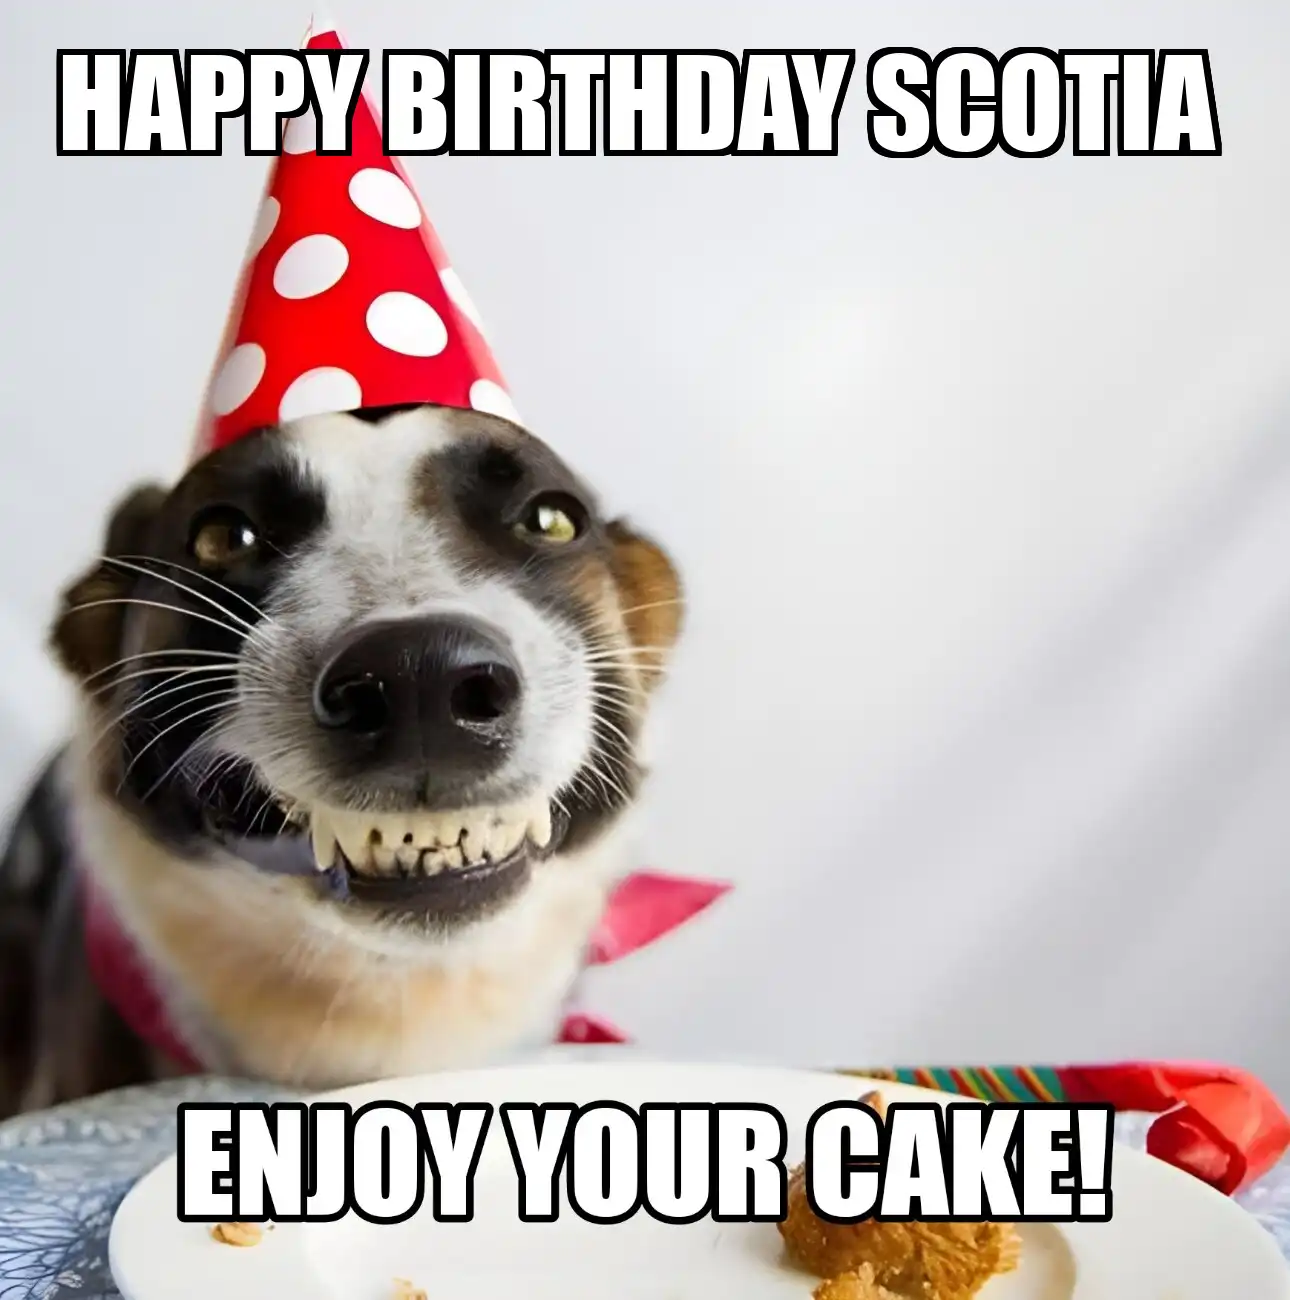 Happy Birthday Scotia Enjoy Your Cake Dog Meme